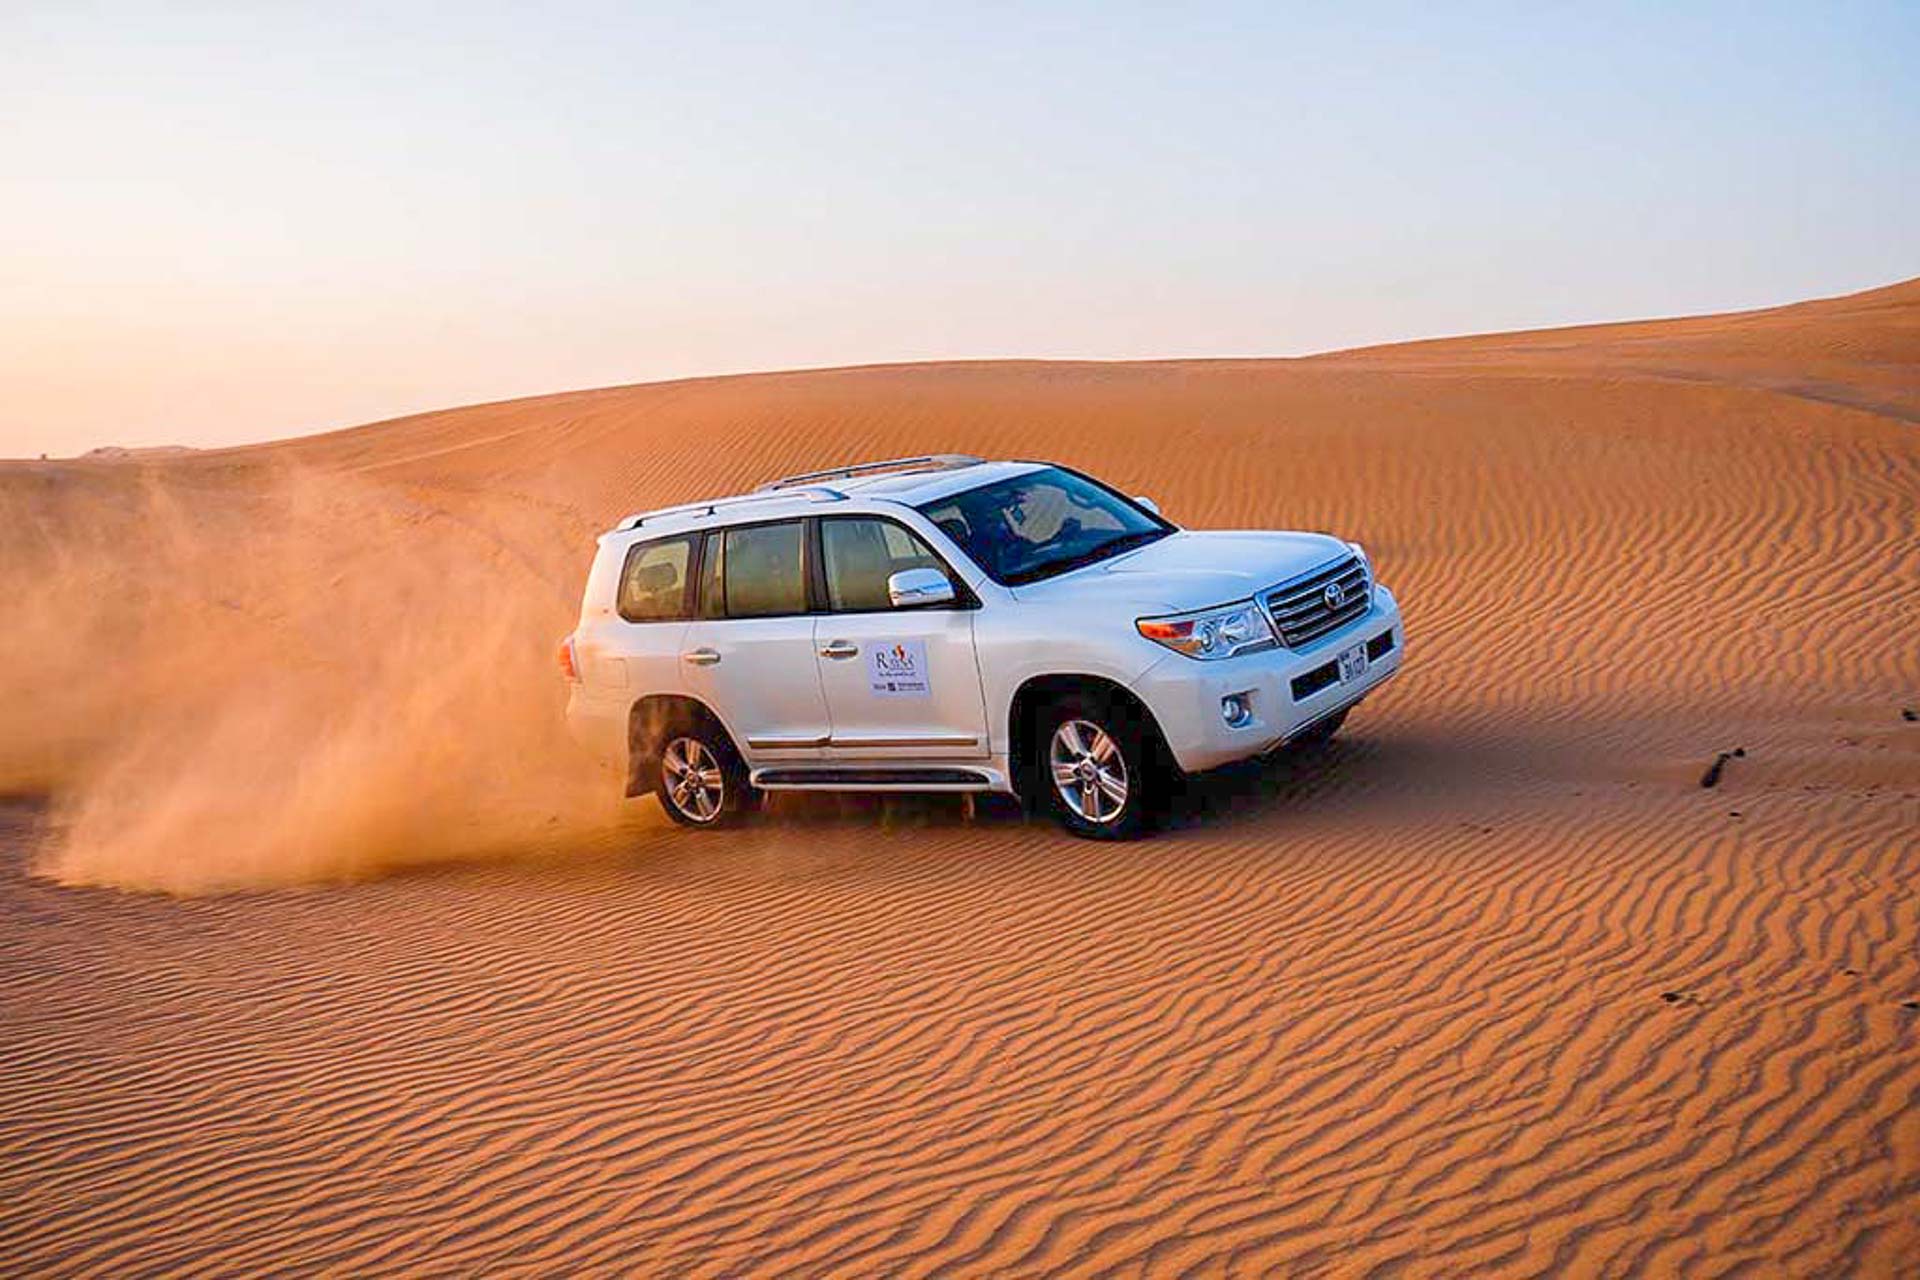 Car riding on desert sending sand up in the air